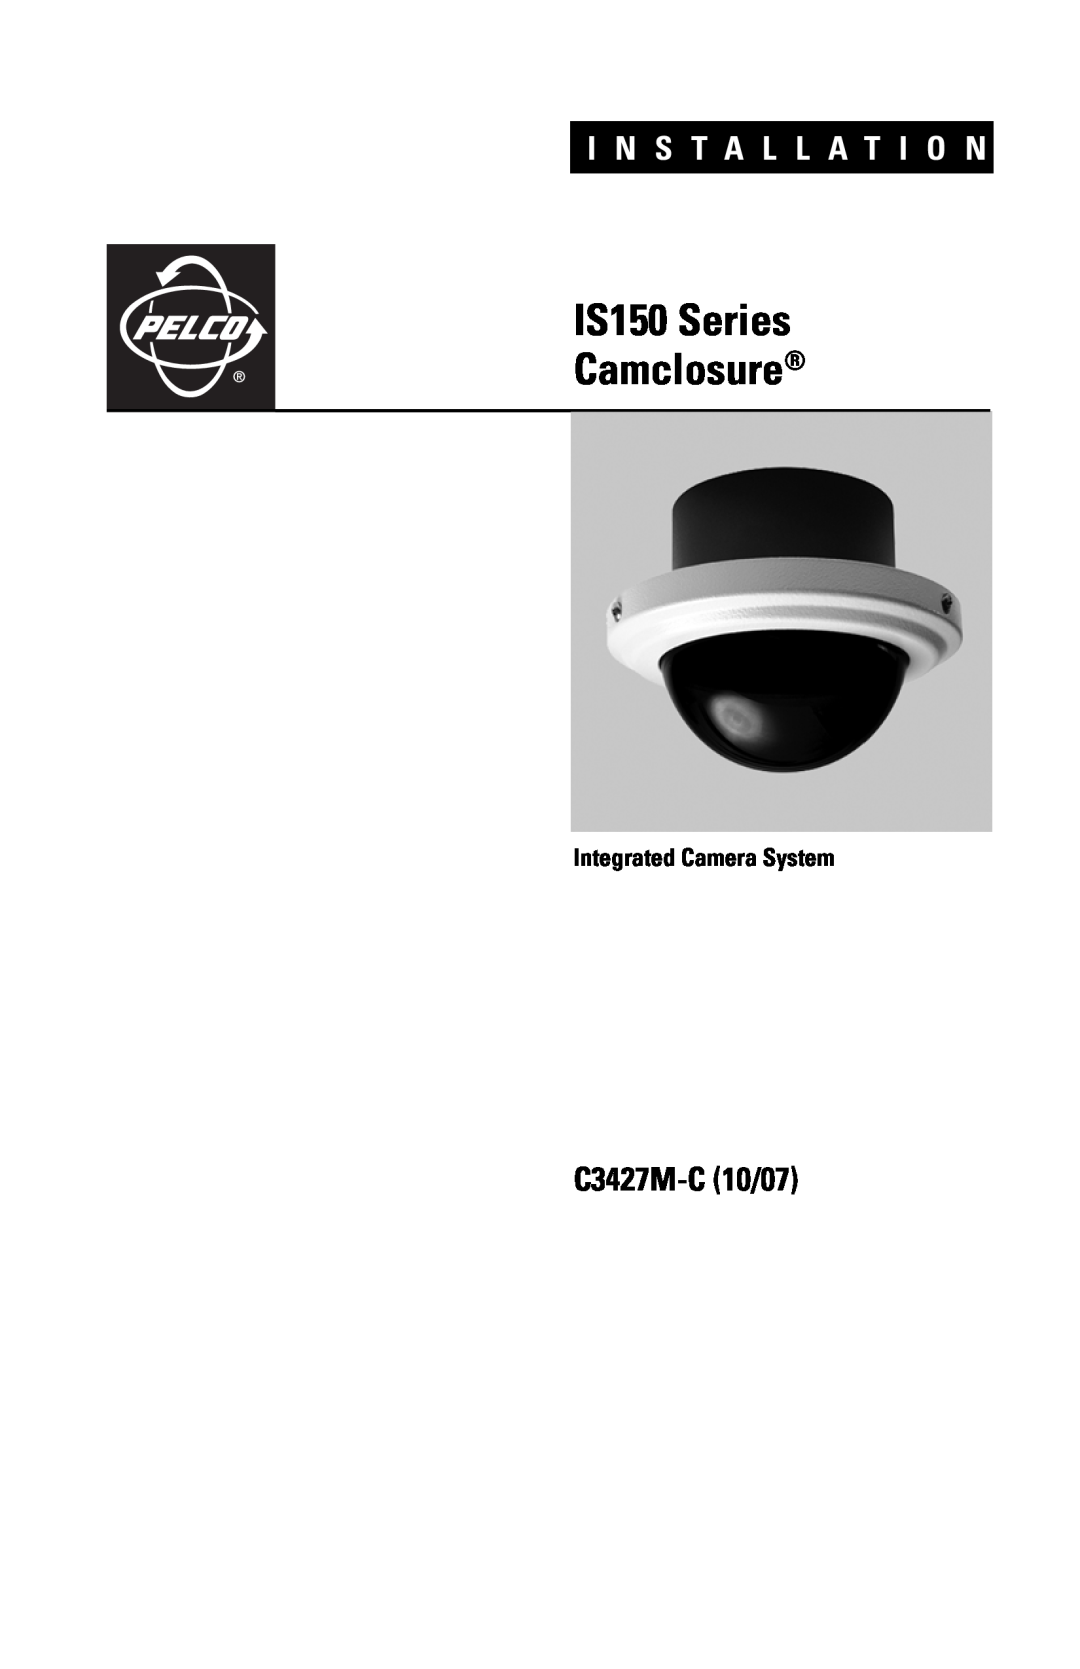 Pelco manual IS150 Series Camclosure, C3427M-C10/07, Integrated Camera System, I N S T A L L A T I O N 